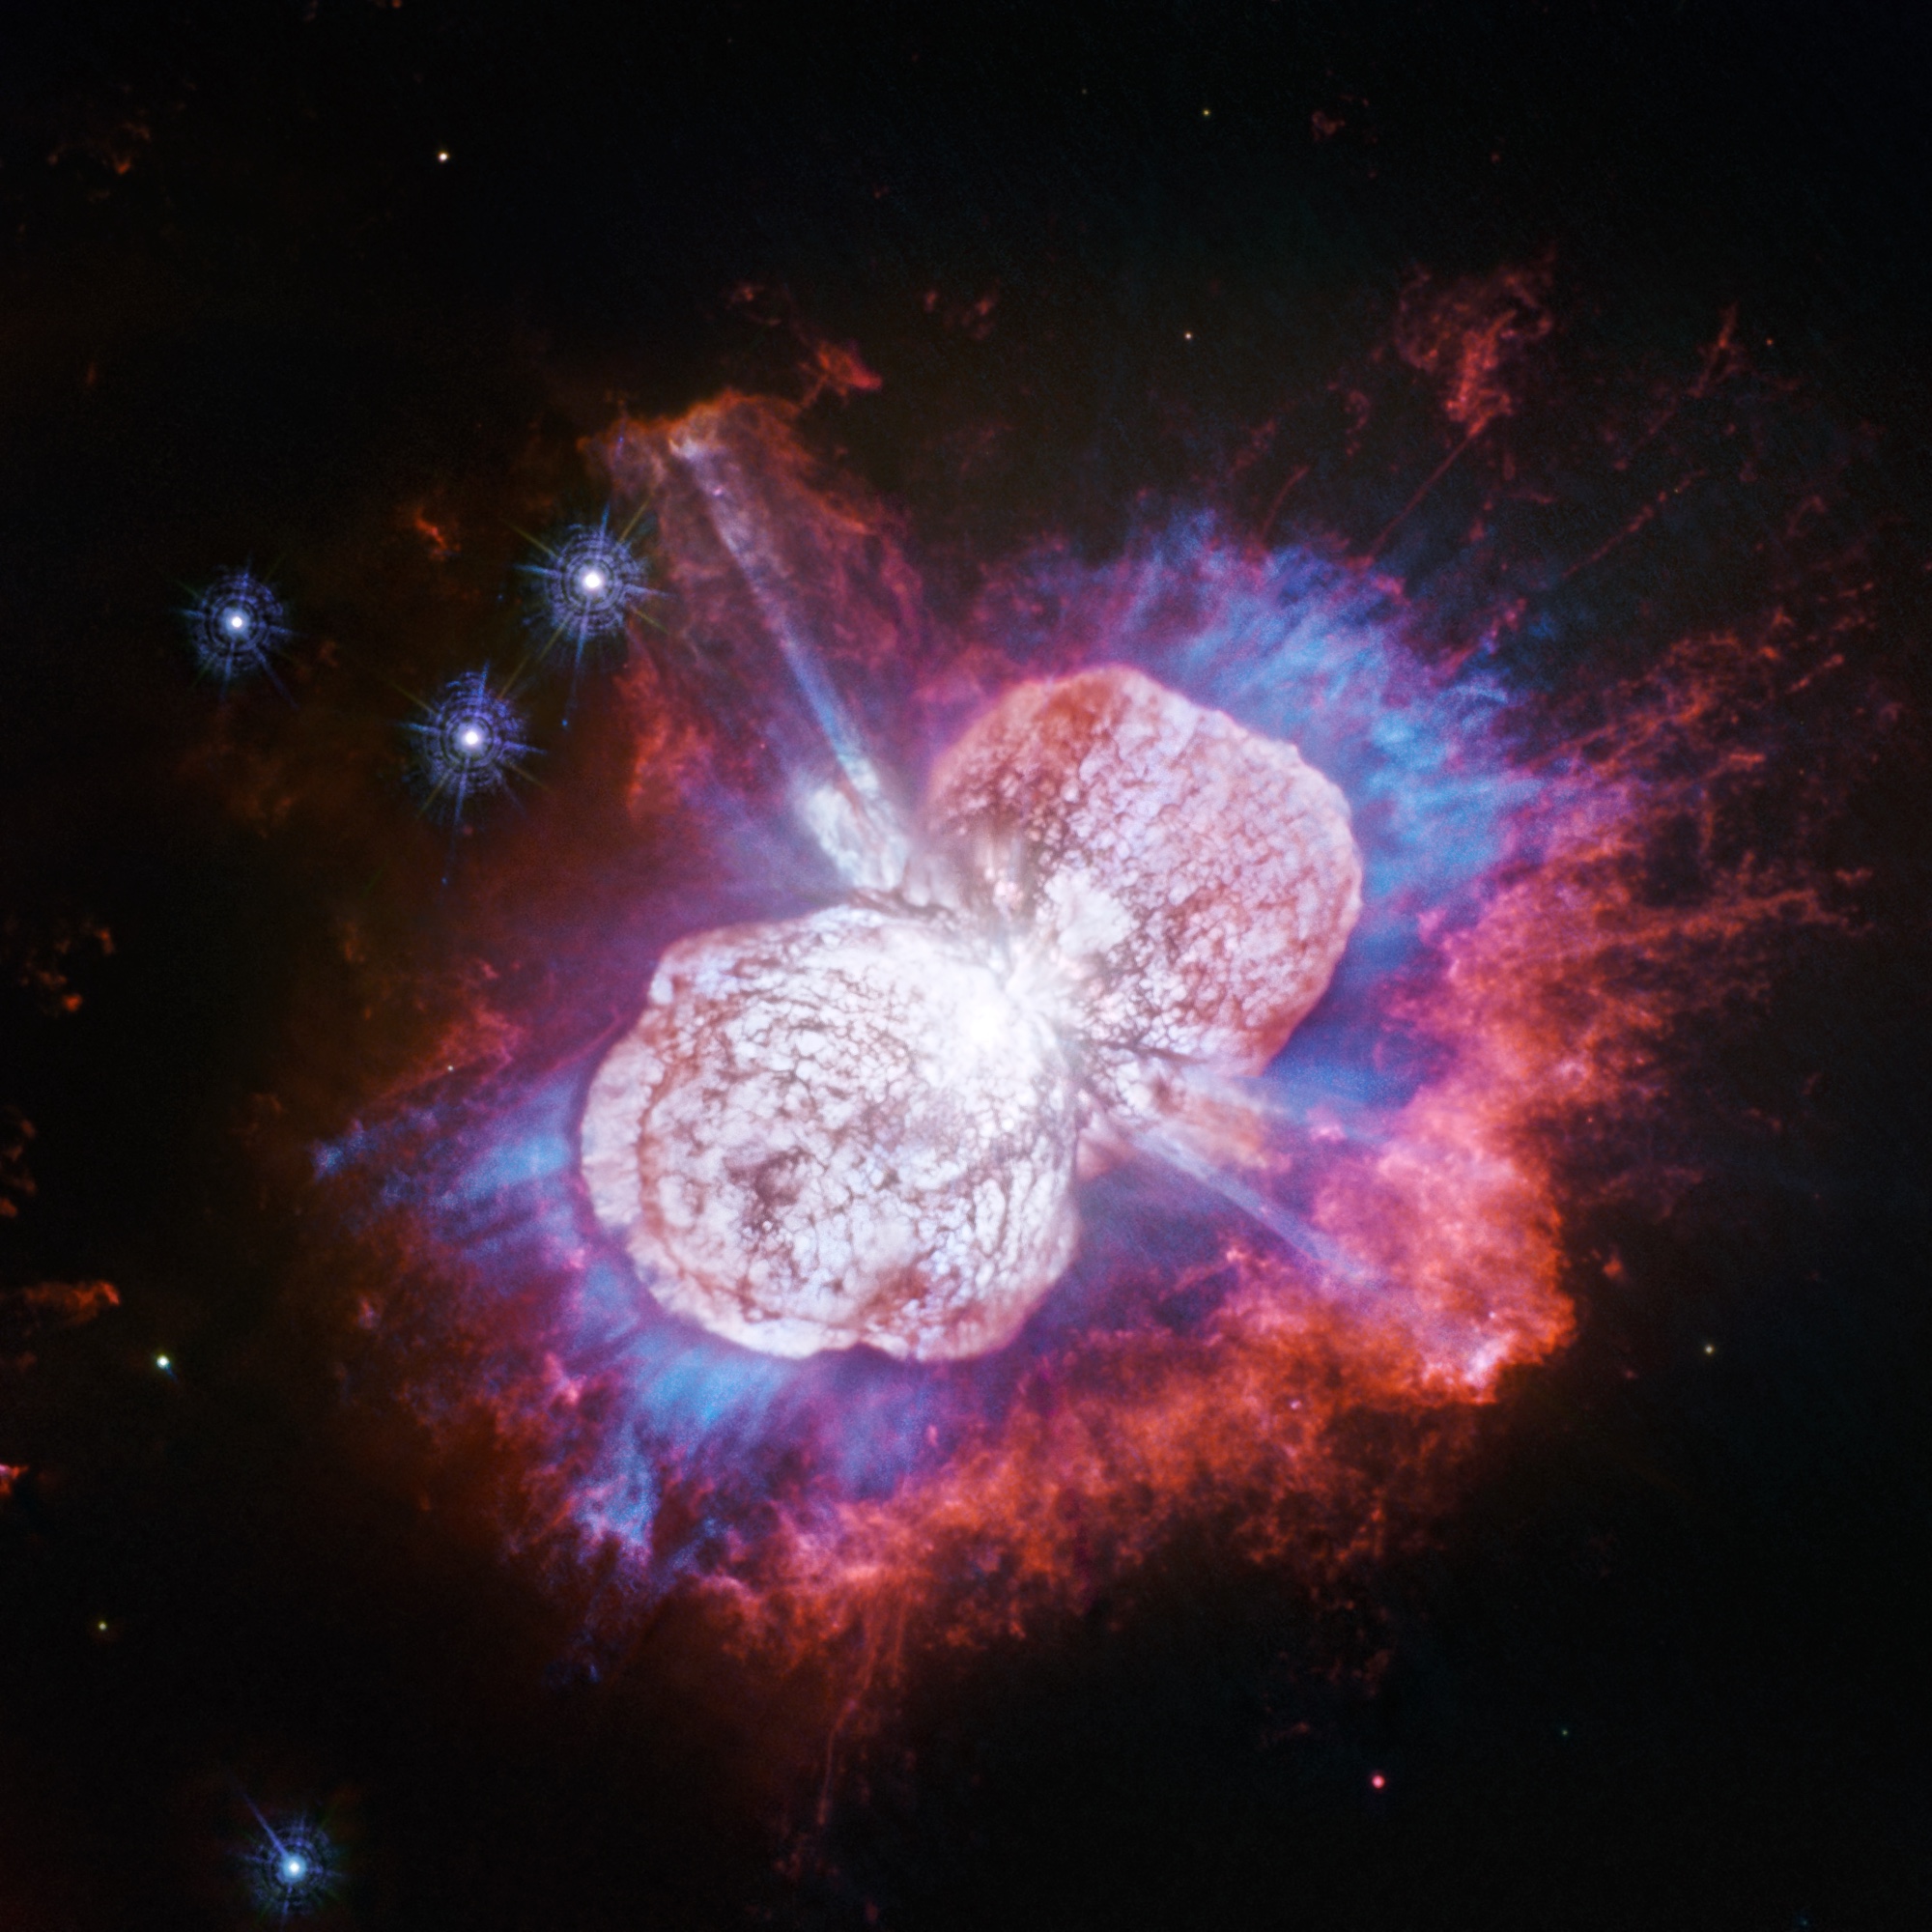 Eta Carinae picture by the Hubble Space Telescope